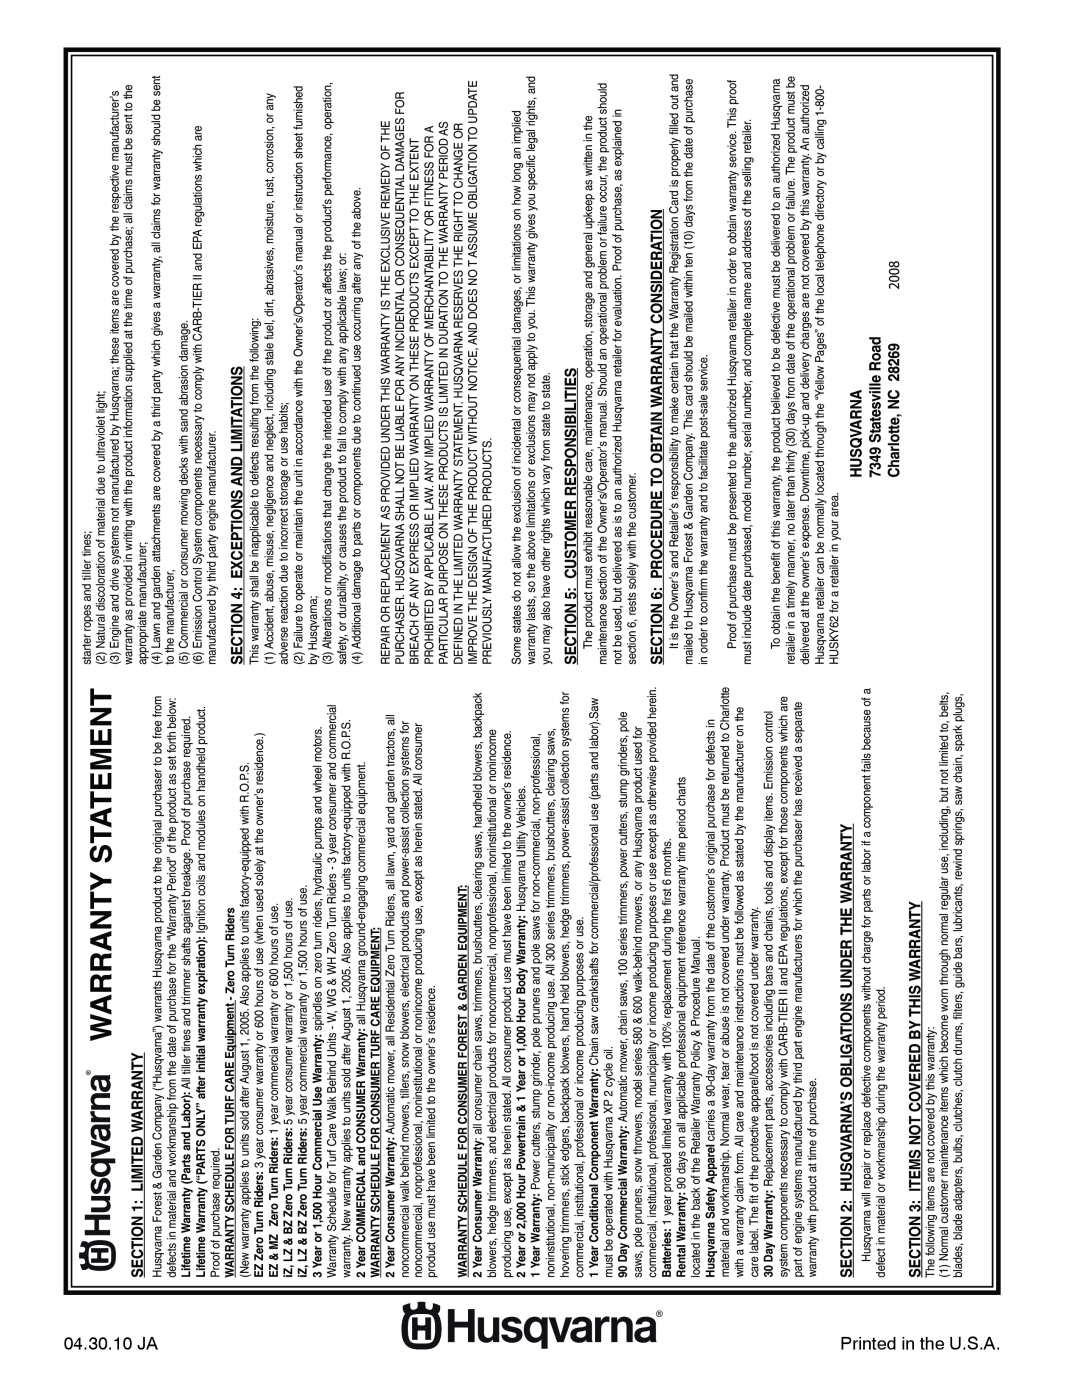 Husqvarna 917.289570 Warranty Statement, 2008, Charlotte, NC, WARRANTY SCHEDULE FOR TURF CARE Equipment - Zero Turn Riders 